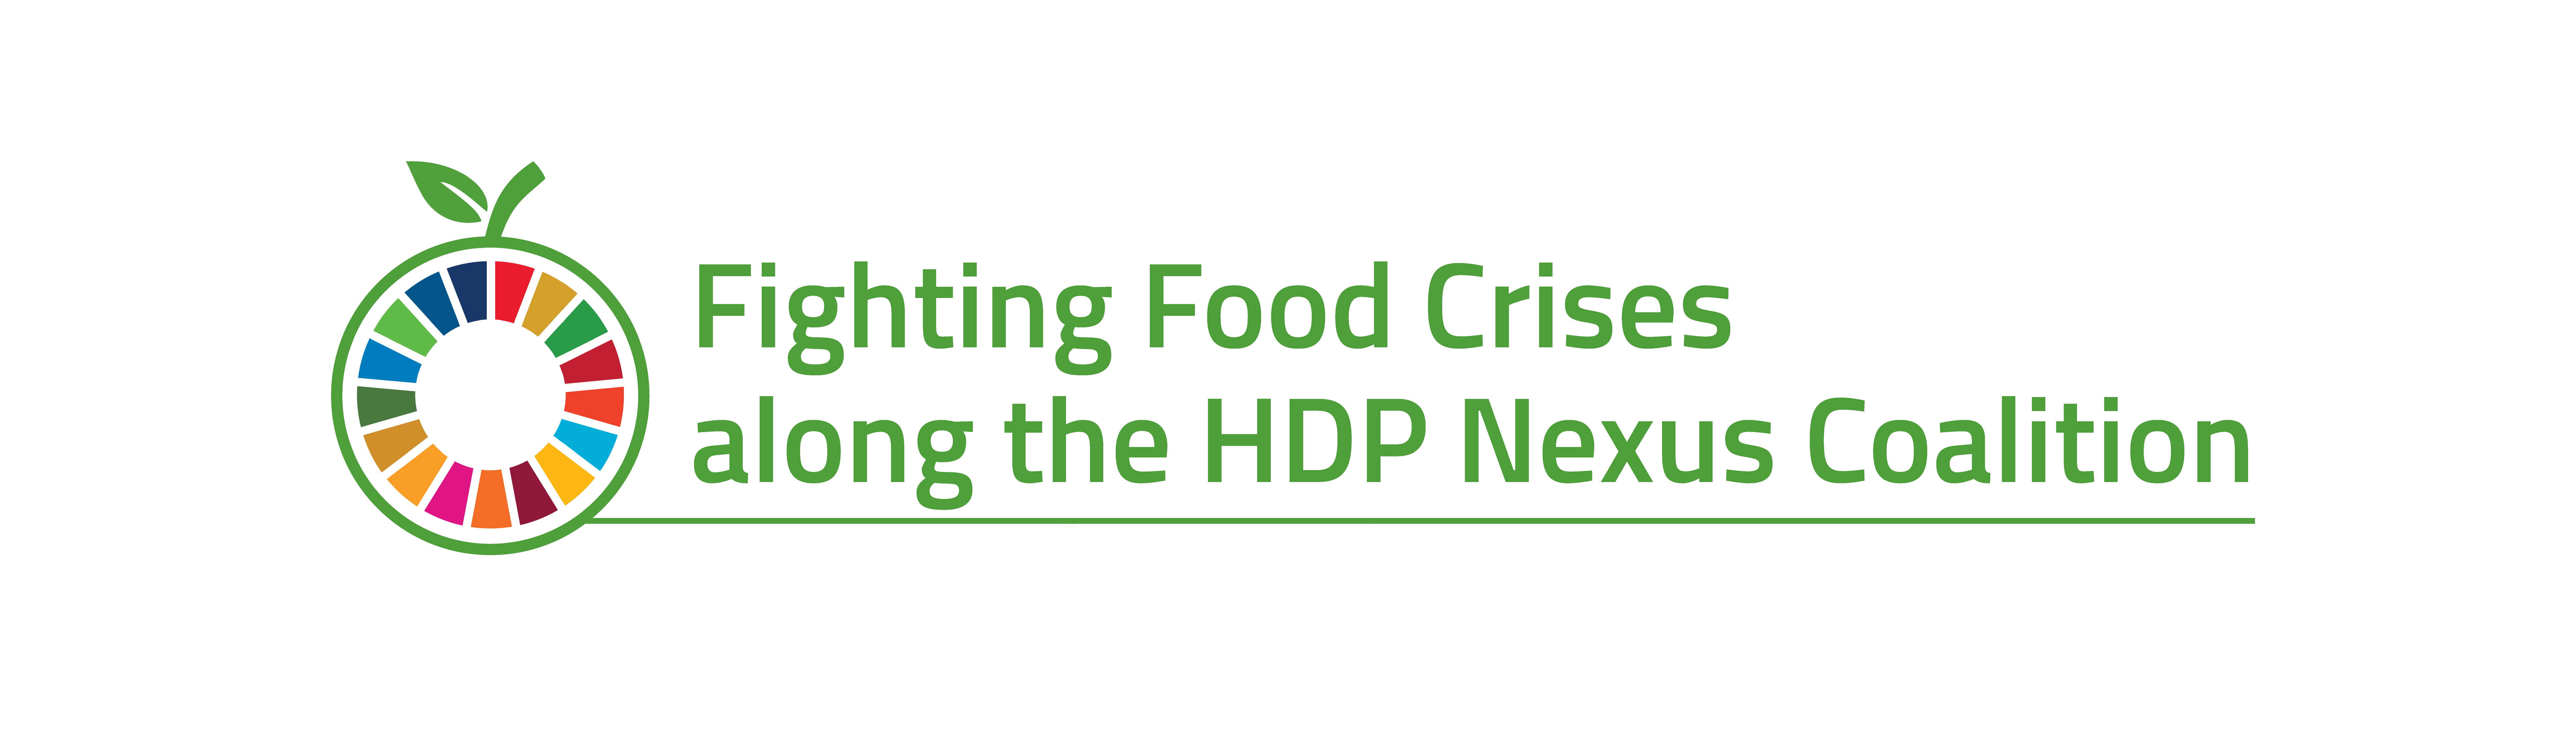 Fighting Food Crises along the HDP Nexus Coalition